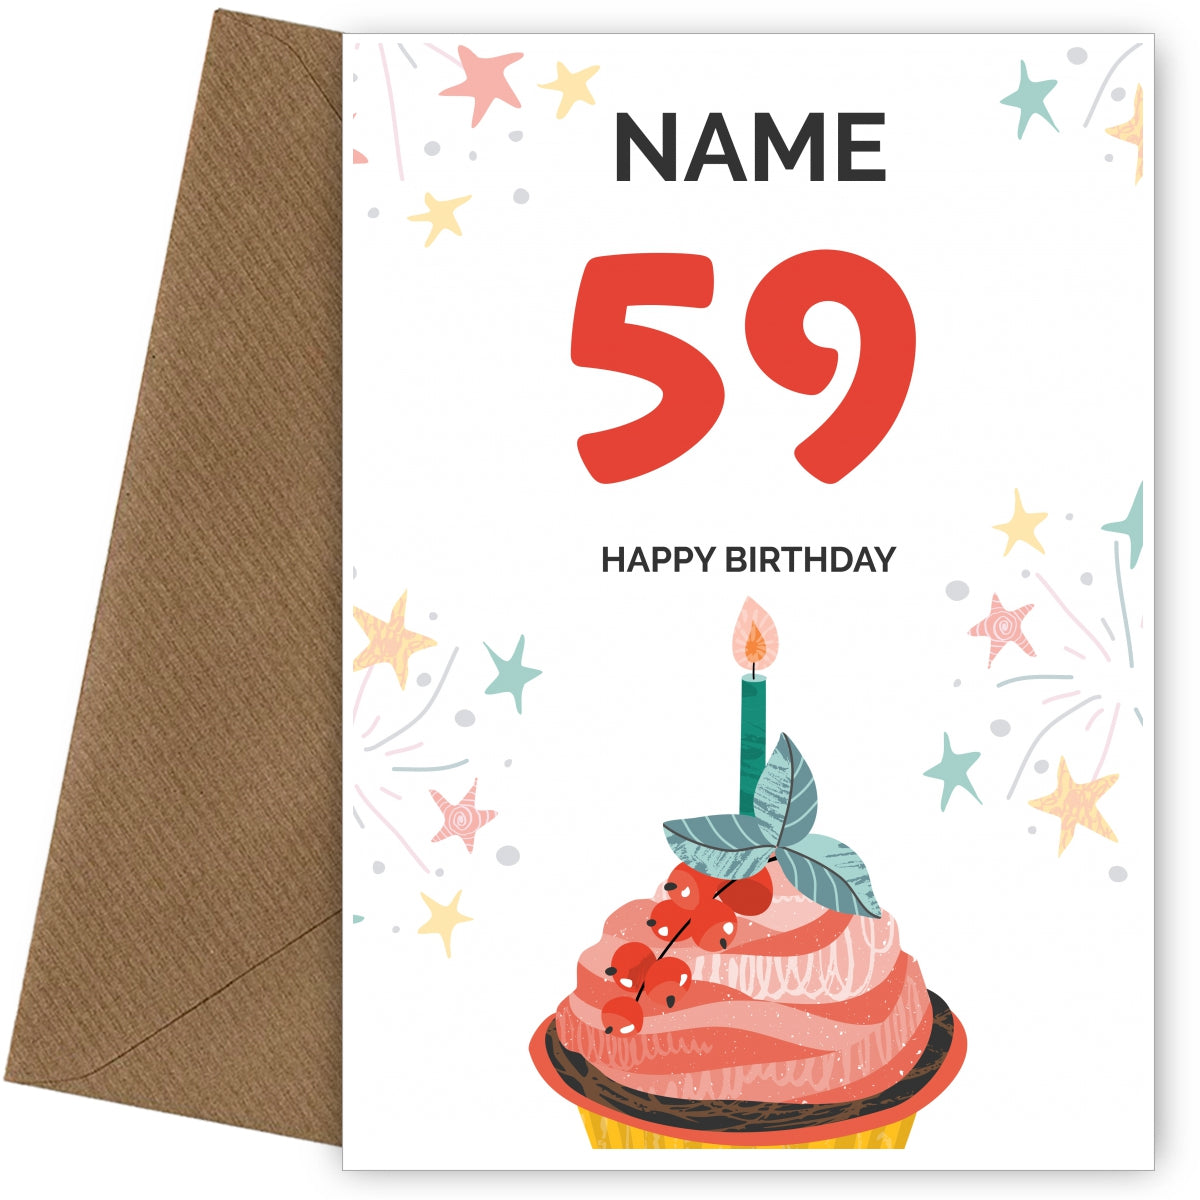 Happy 59th Birthday Card - Fun Cupcake Design